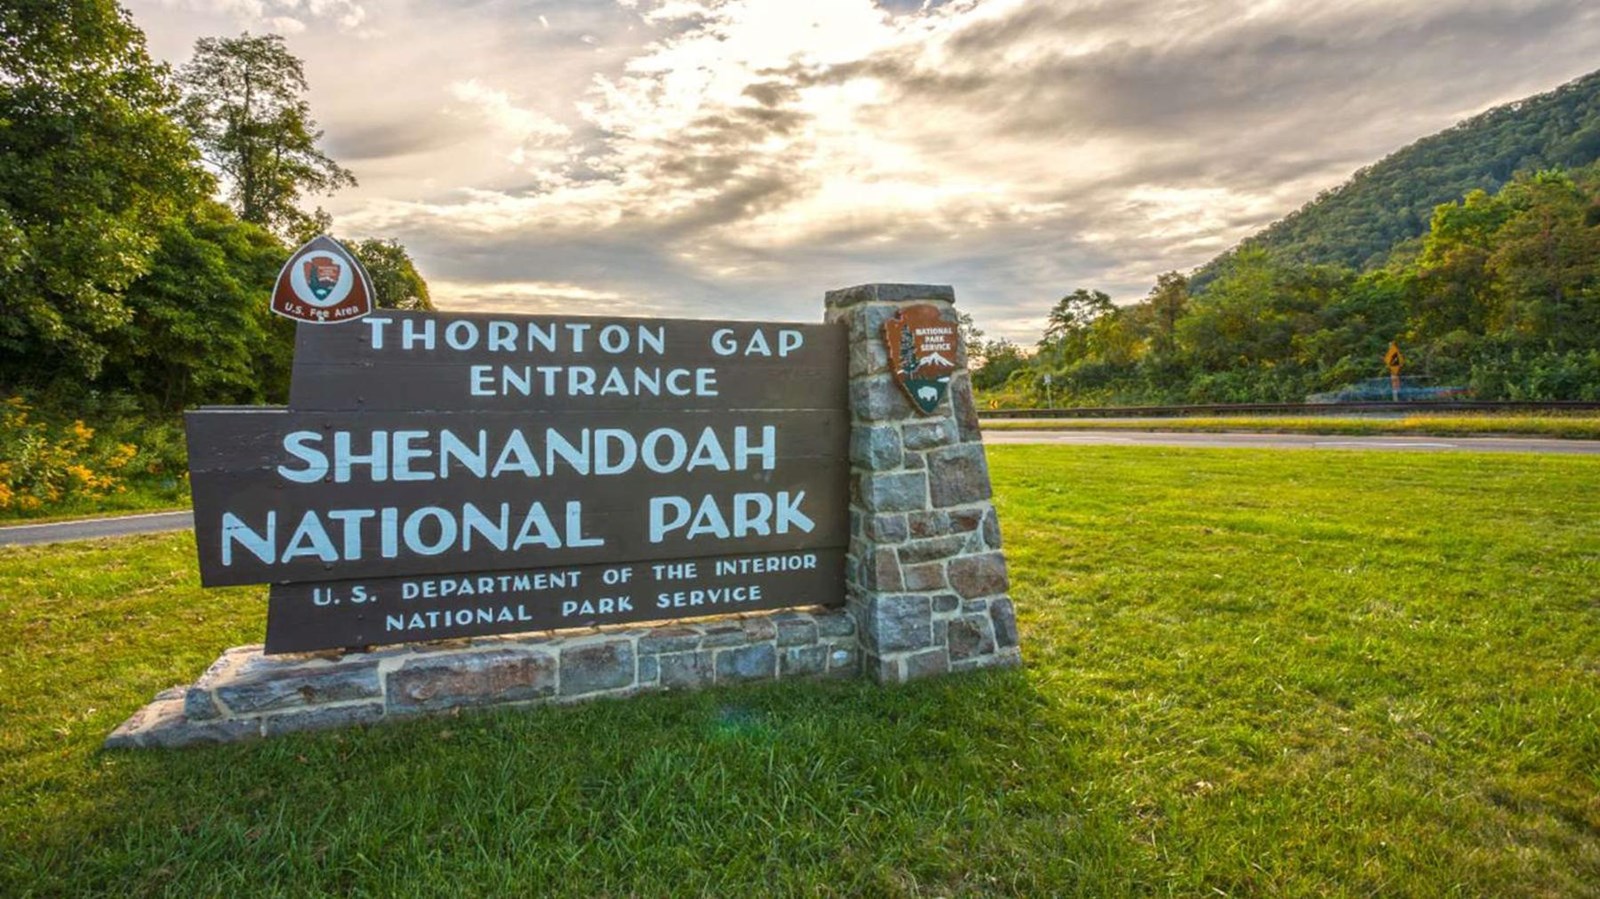 Thornton Gap Entrance (U.S. National Park Service)